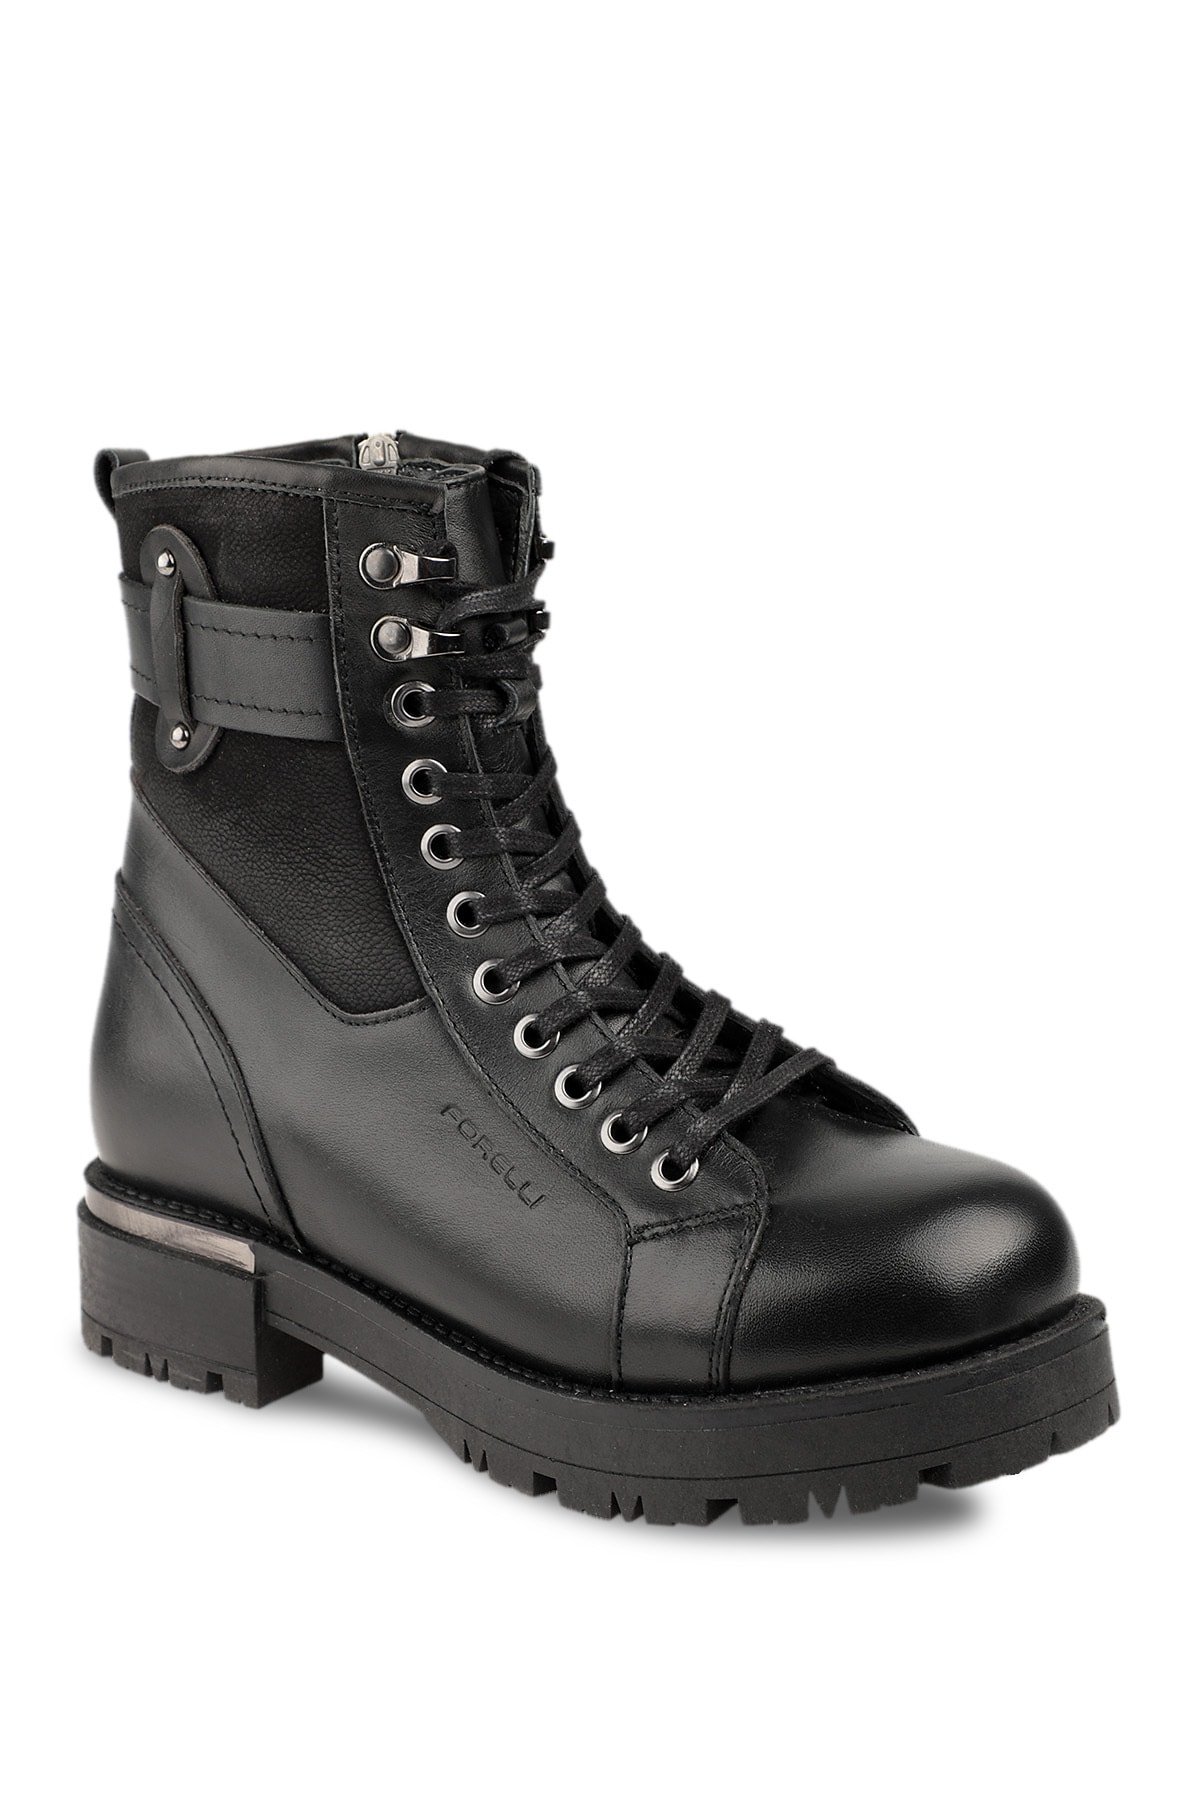 Forelli Rex-g Women's Short Boots Shoes Black